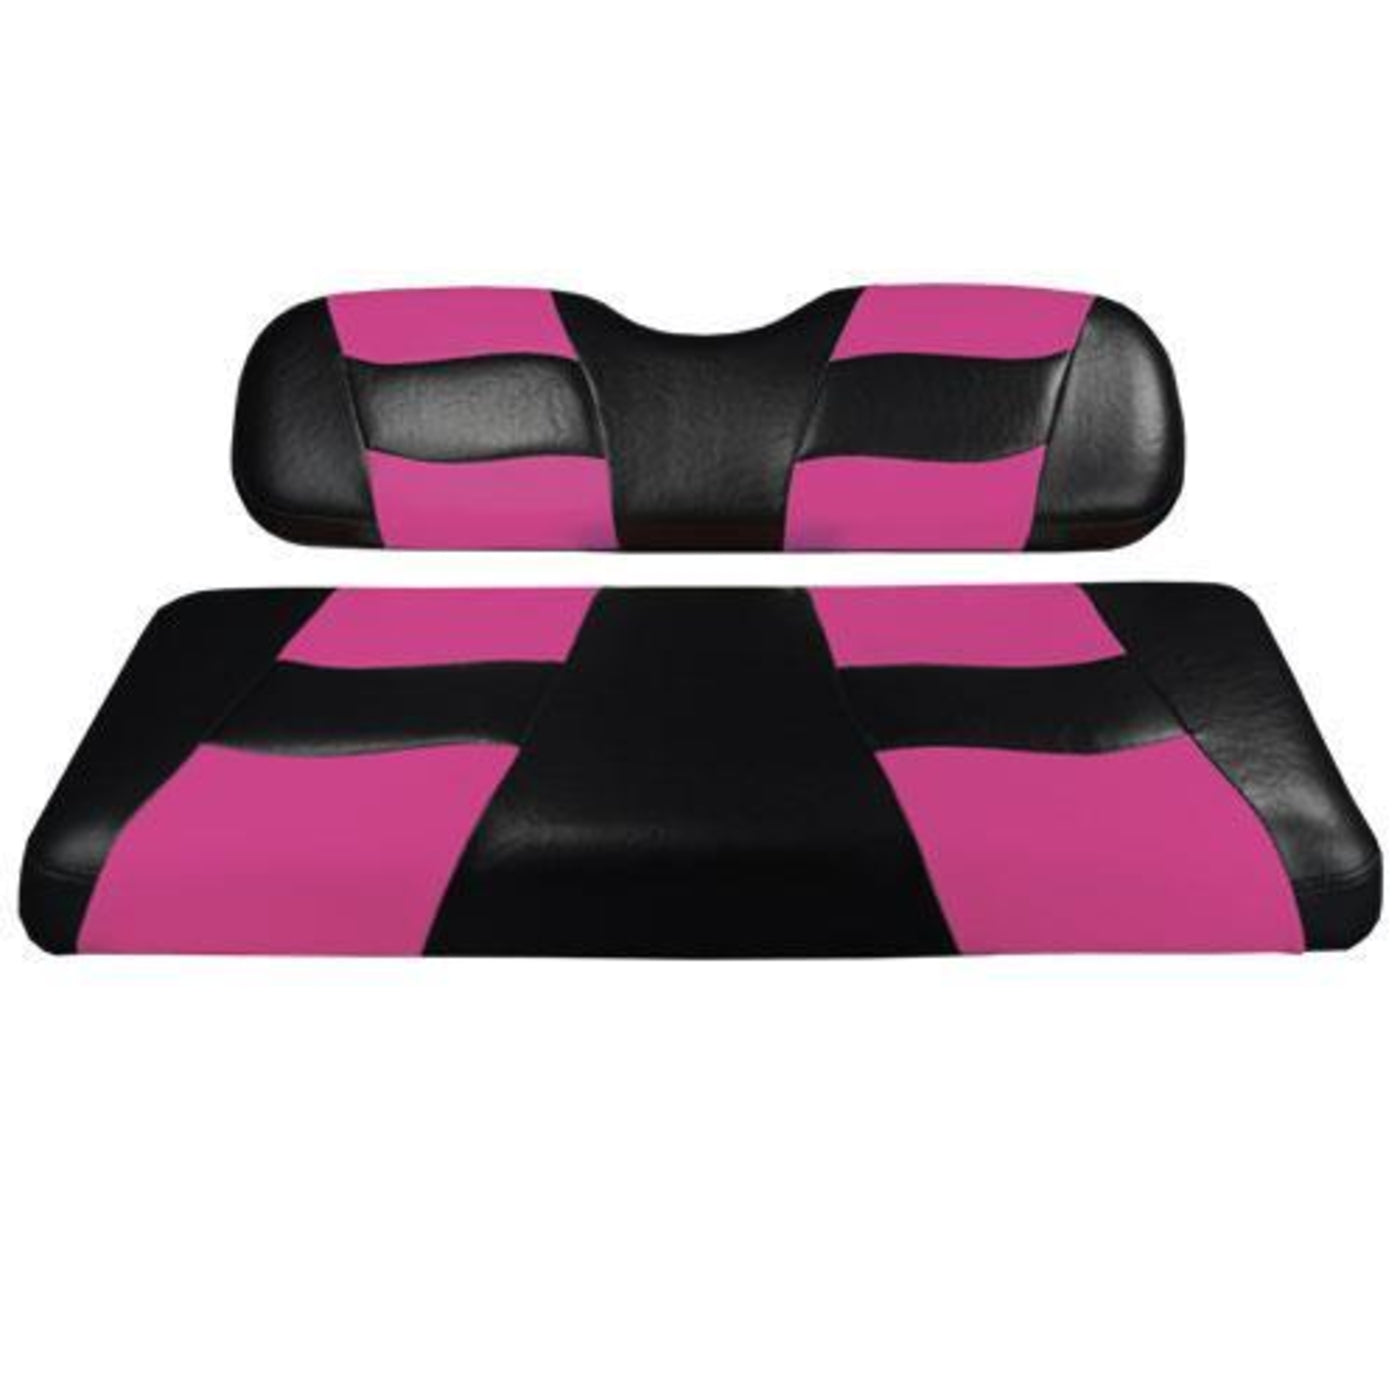 MadJax Deluxe Riptide Black/Pink Two-Tone Genesis 250/300 Seat Cushions 10-164P